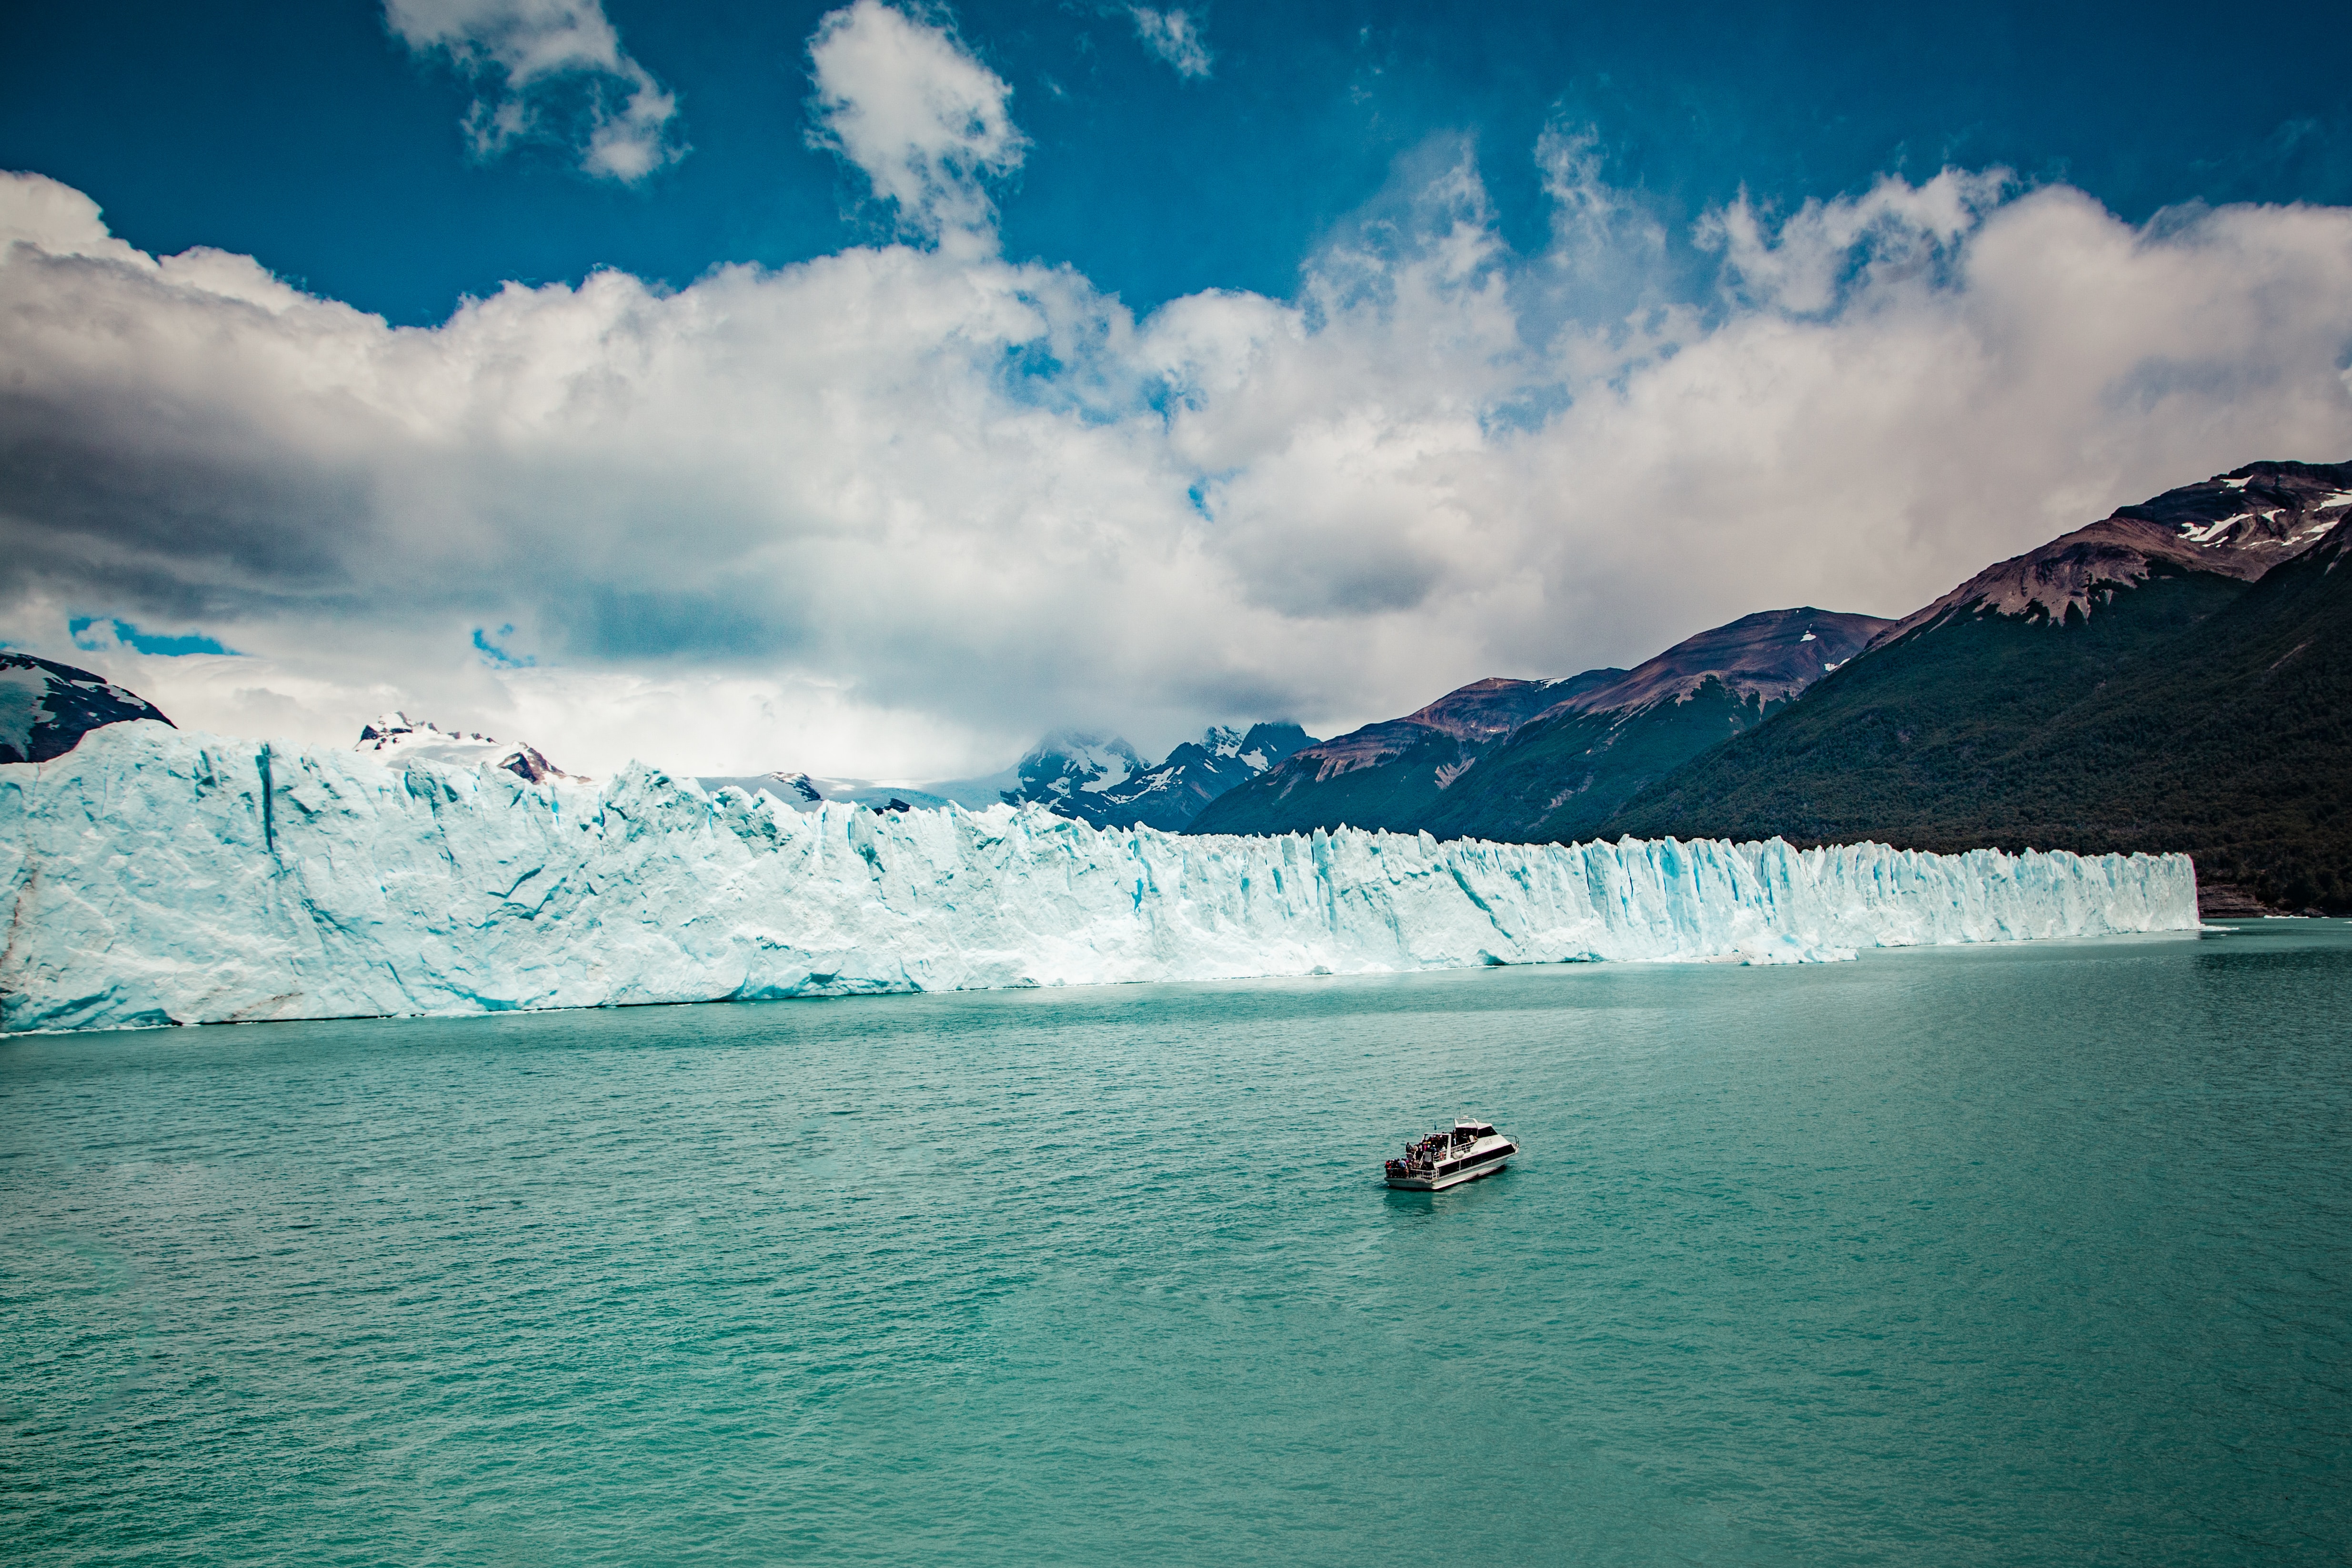 Icebergs, luuk wouters, unsplash